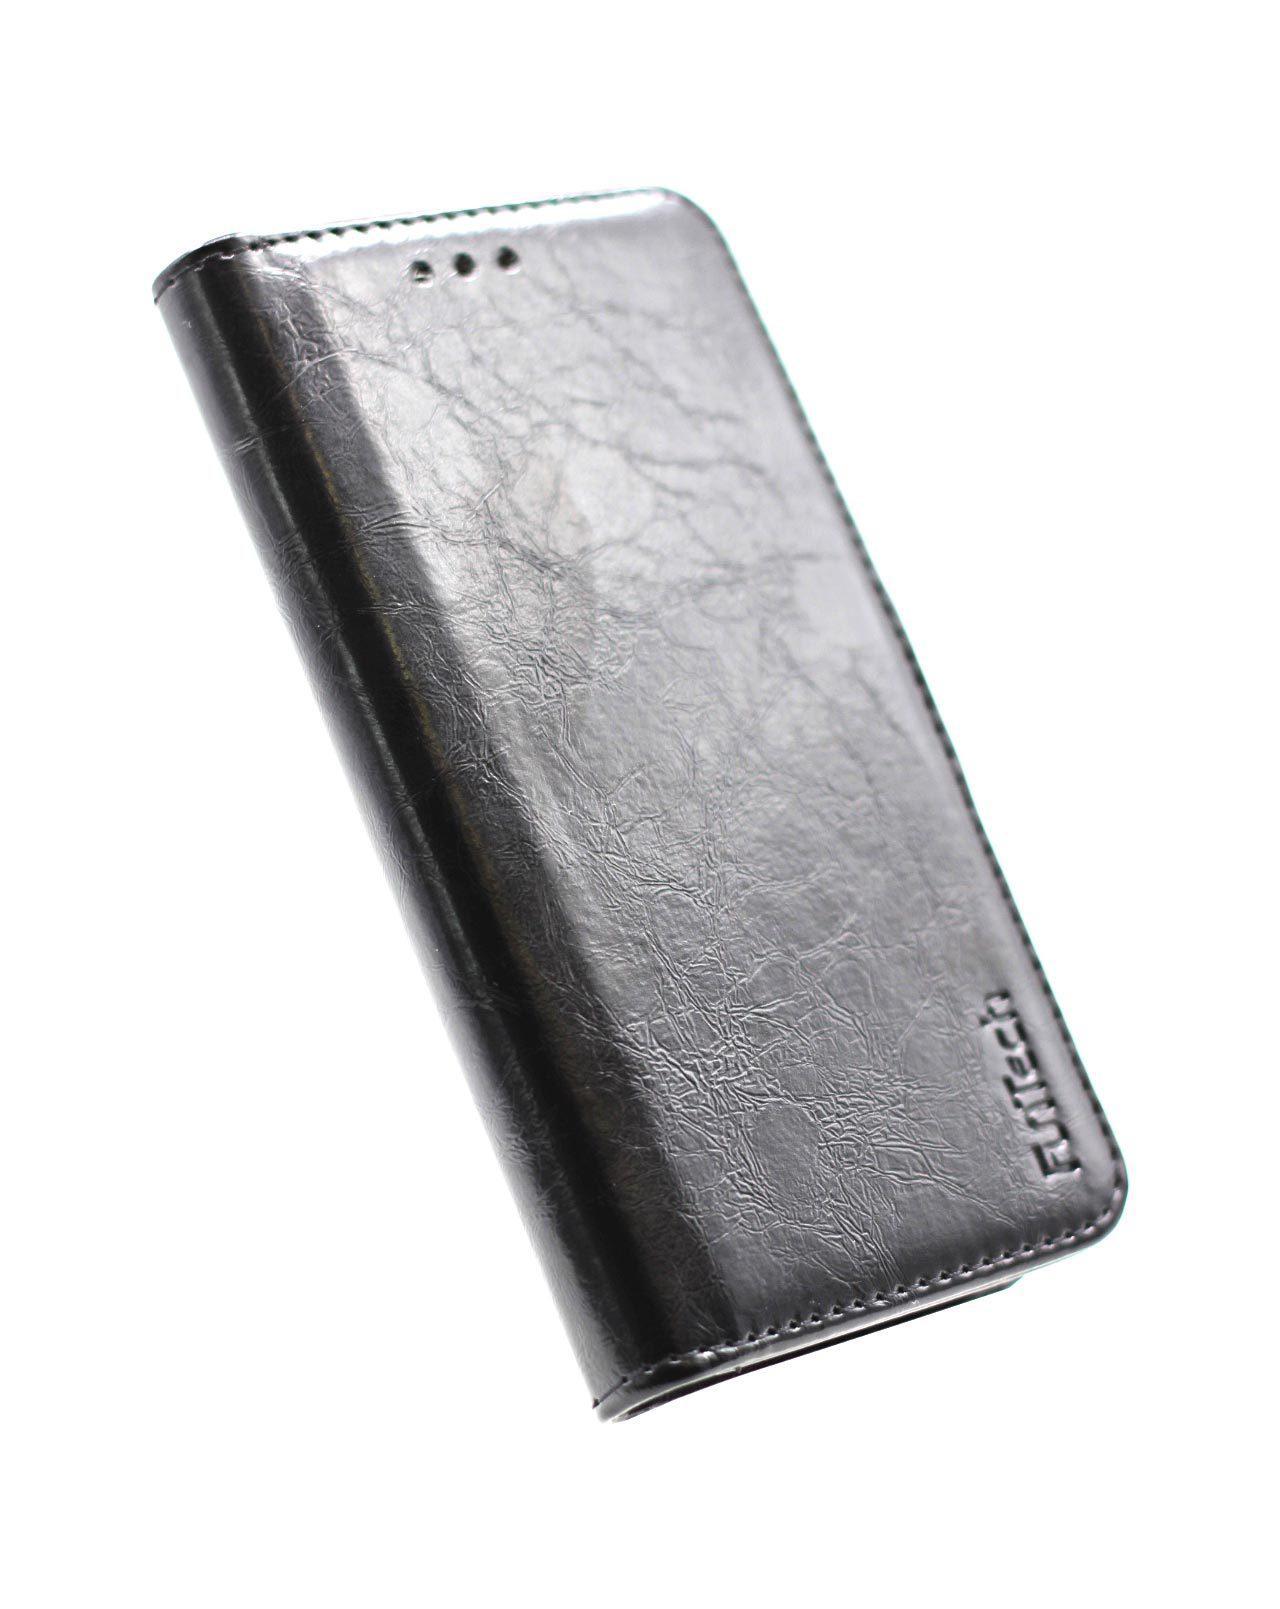 Samsung A3 2017 Leather Wallet Case Black